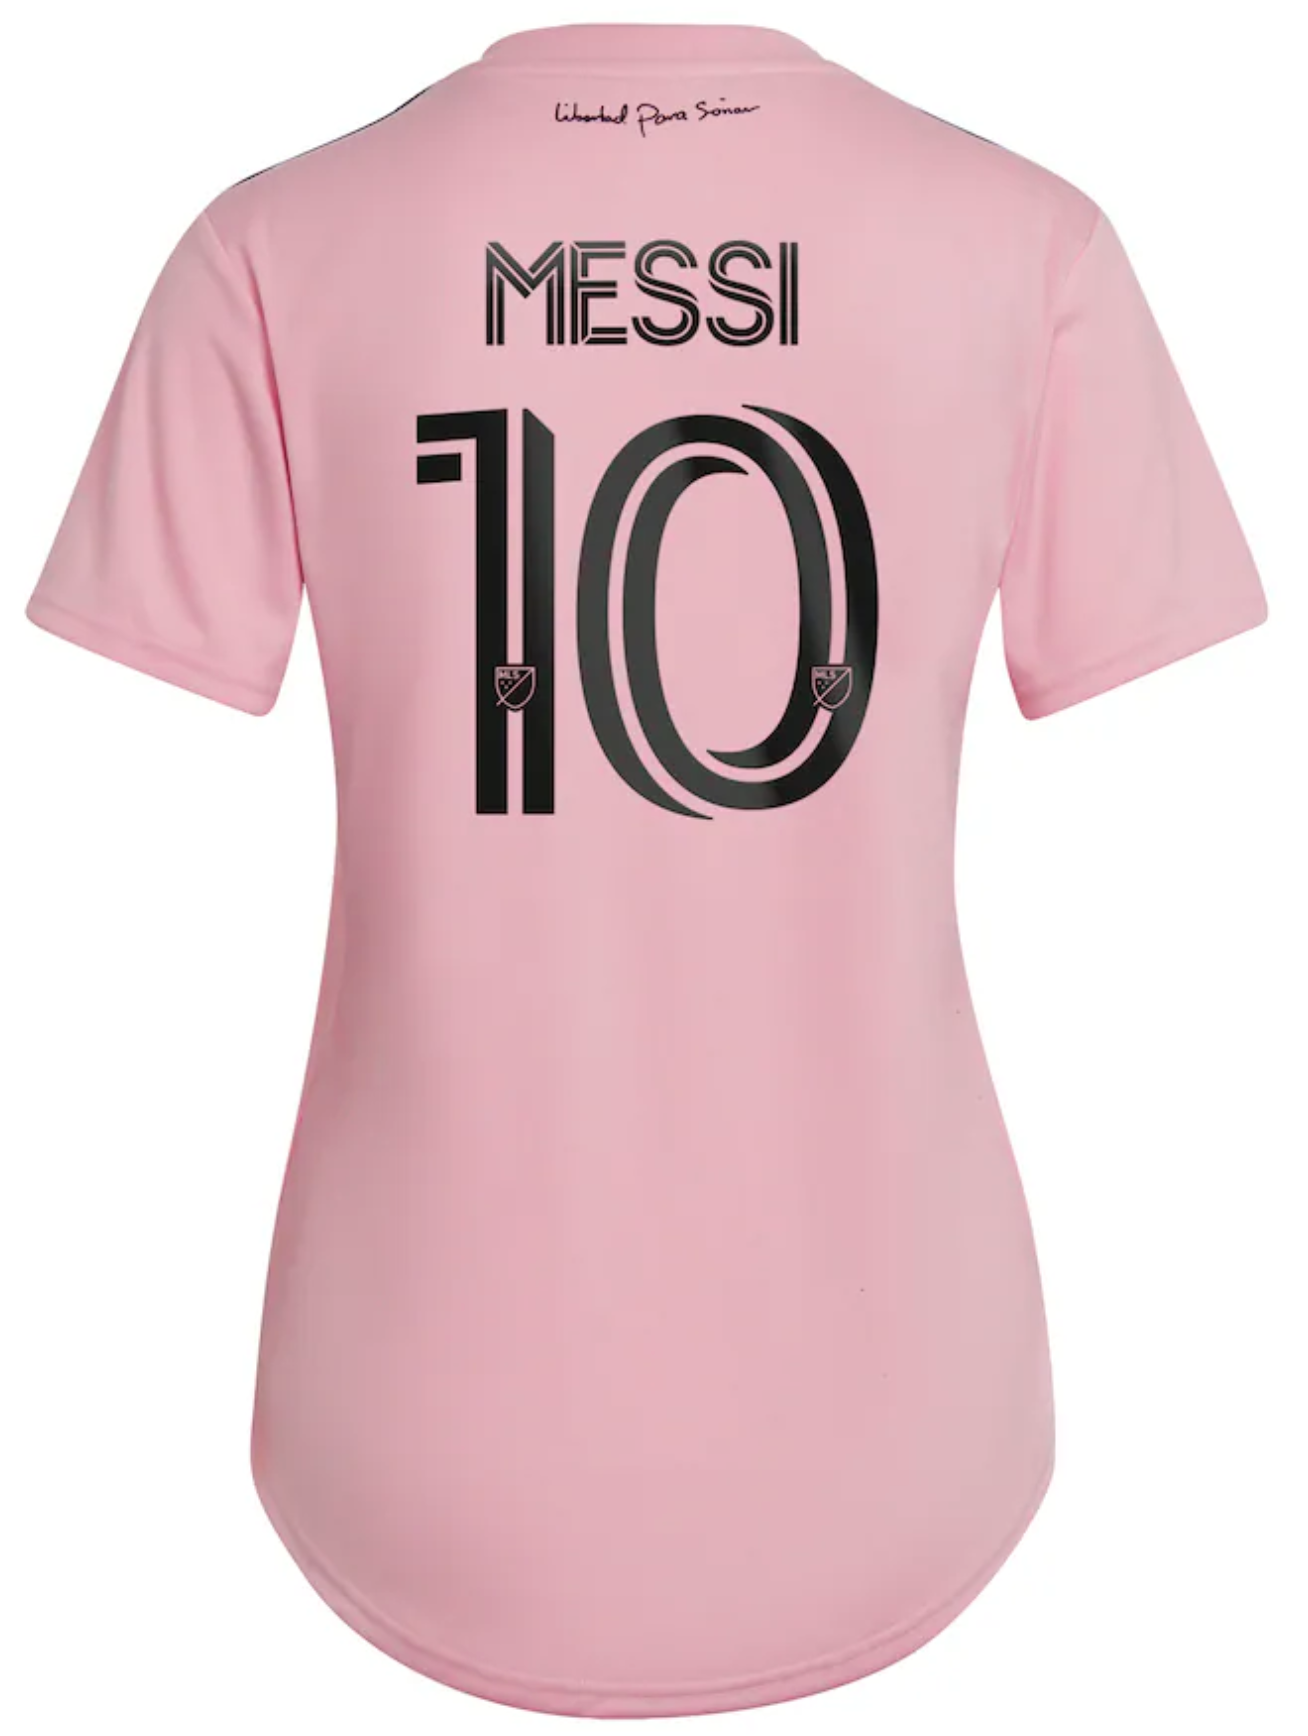 Replica Adidas MESSI #10 Argentina Away Soccer Jersey 2020